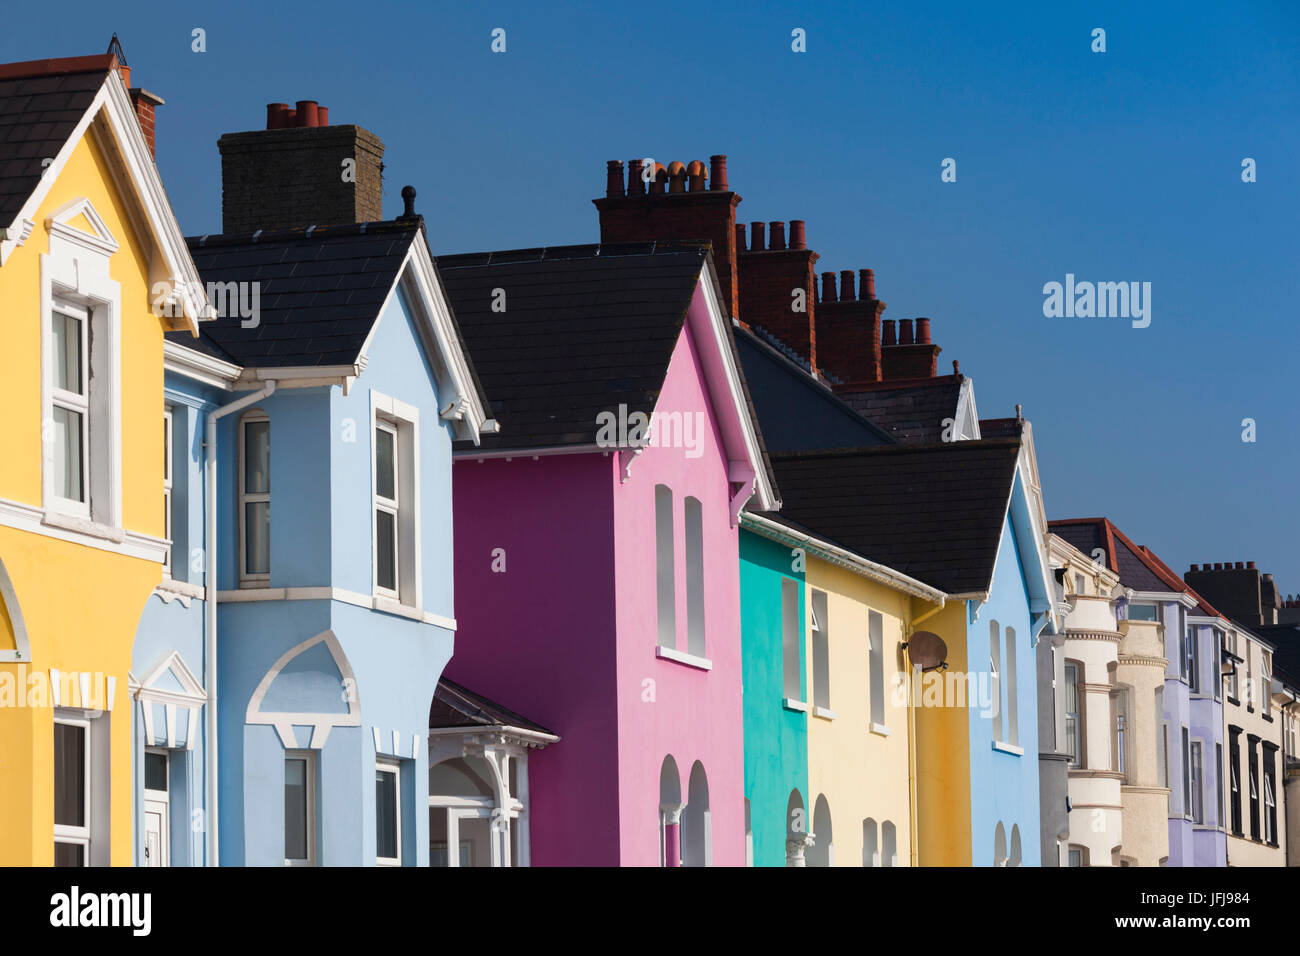 UK, Northern Ireland, County Antrim, Whitehead, colorful houses Stock Photo